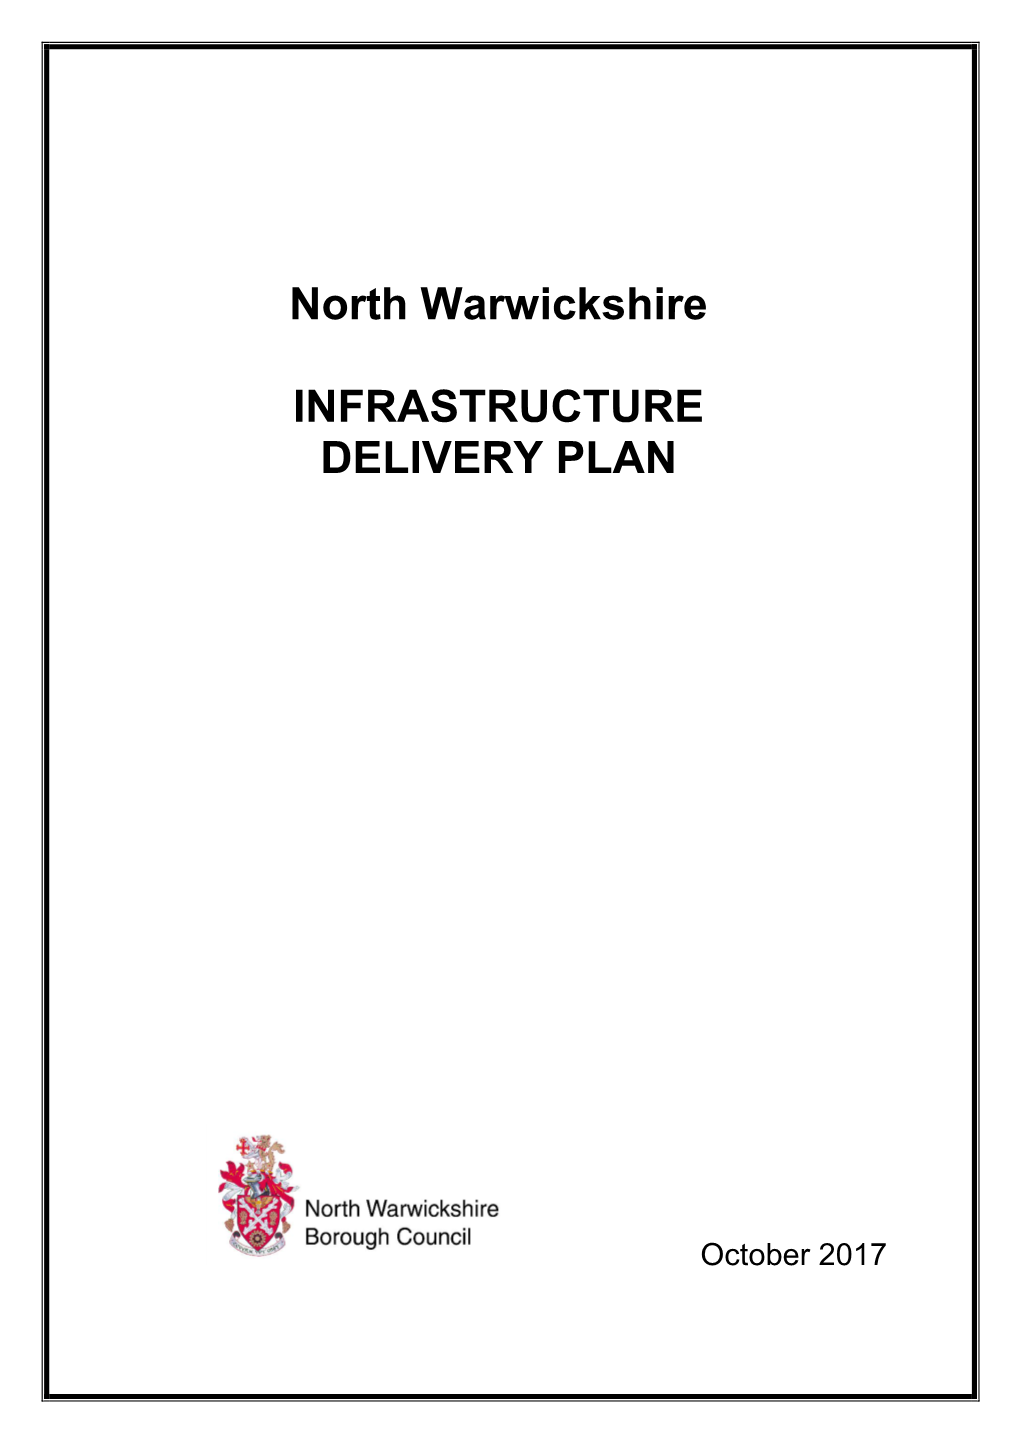 North Warwickshire Infrastructure Delivery Plan September 2017